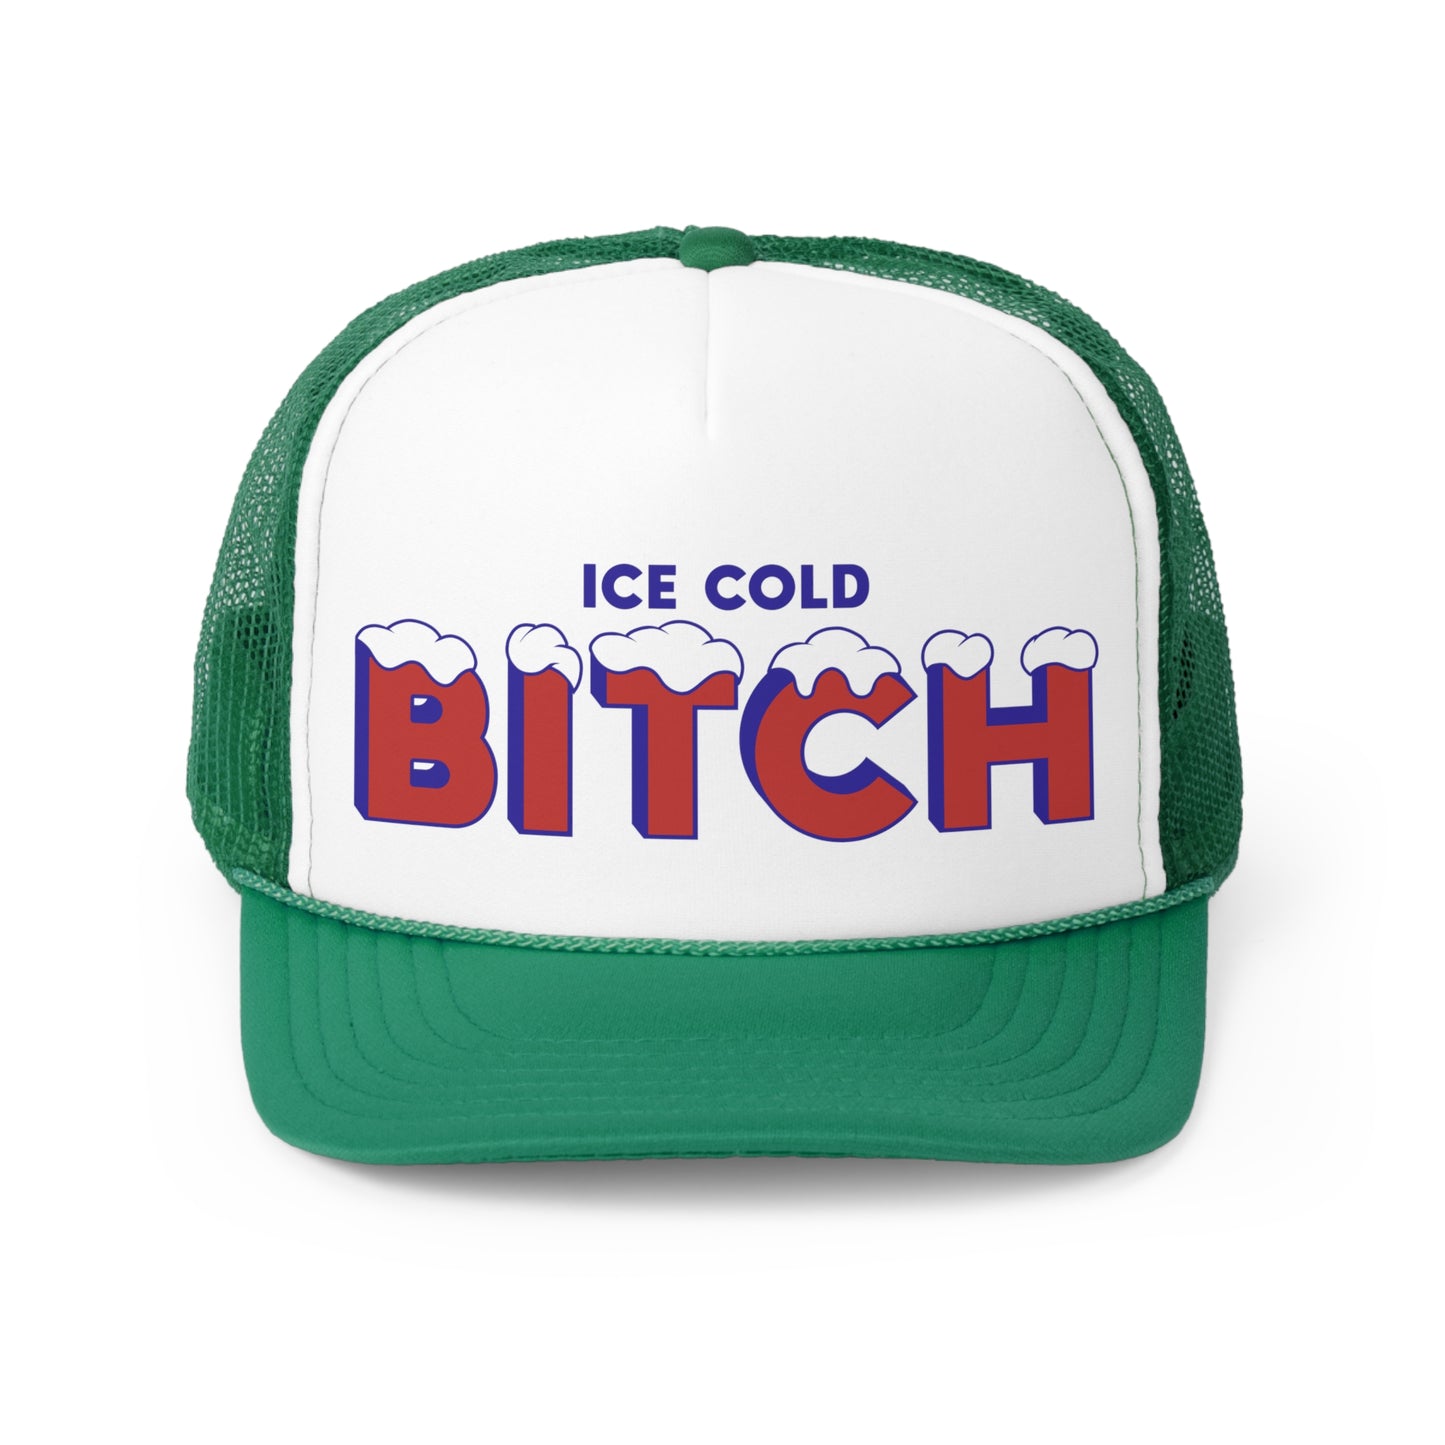 Ice Cold Bitch trucker hat